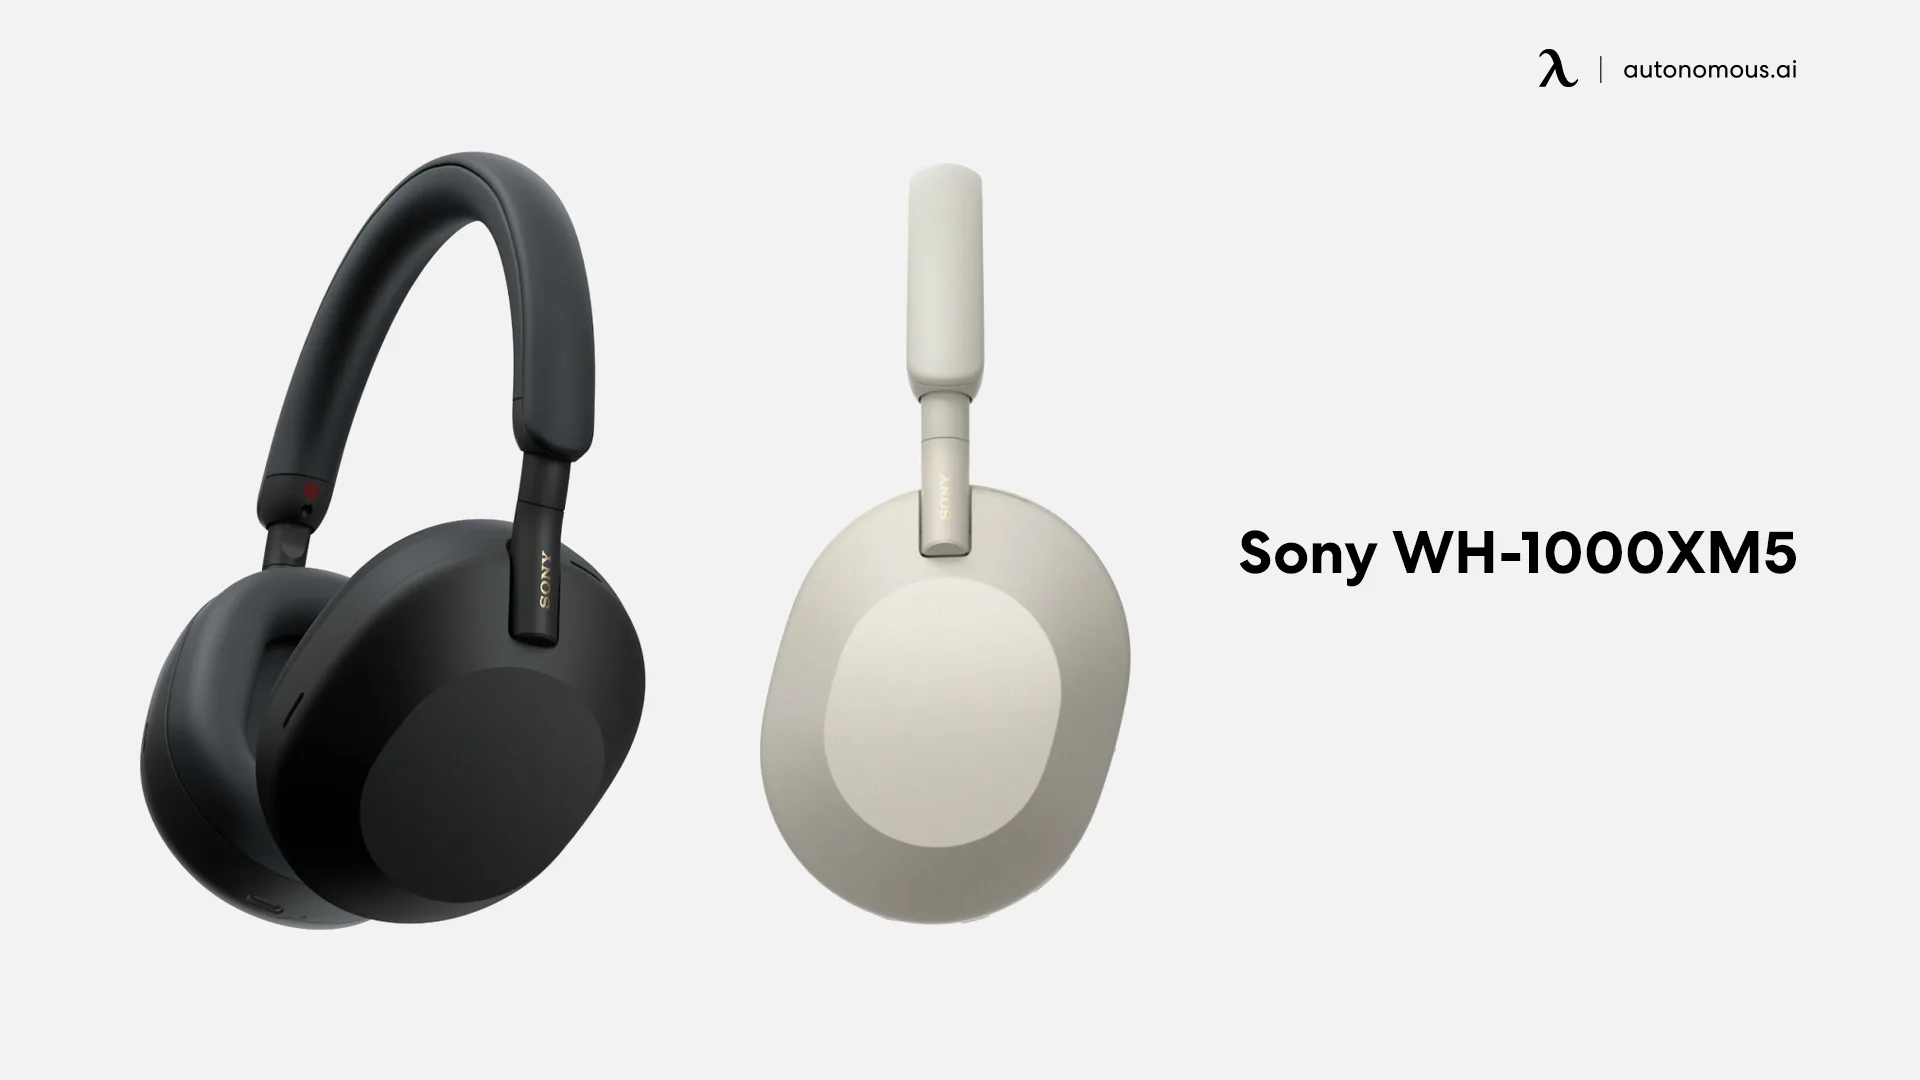 Sony WH-1000MX5 wireless noise-canceling headphones